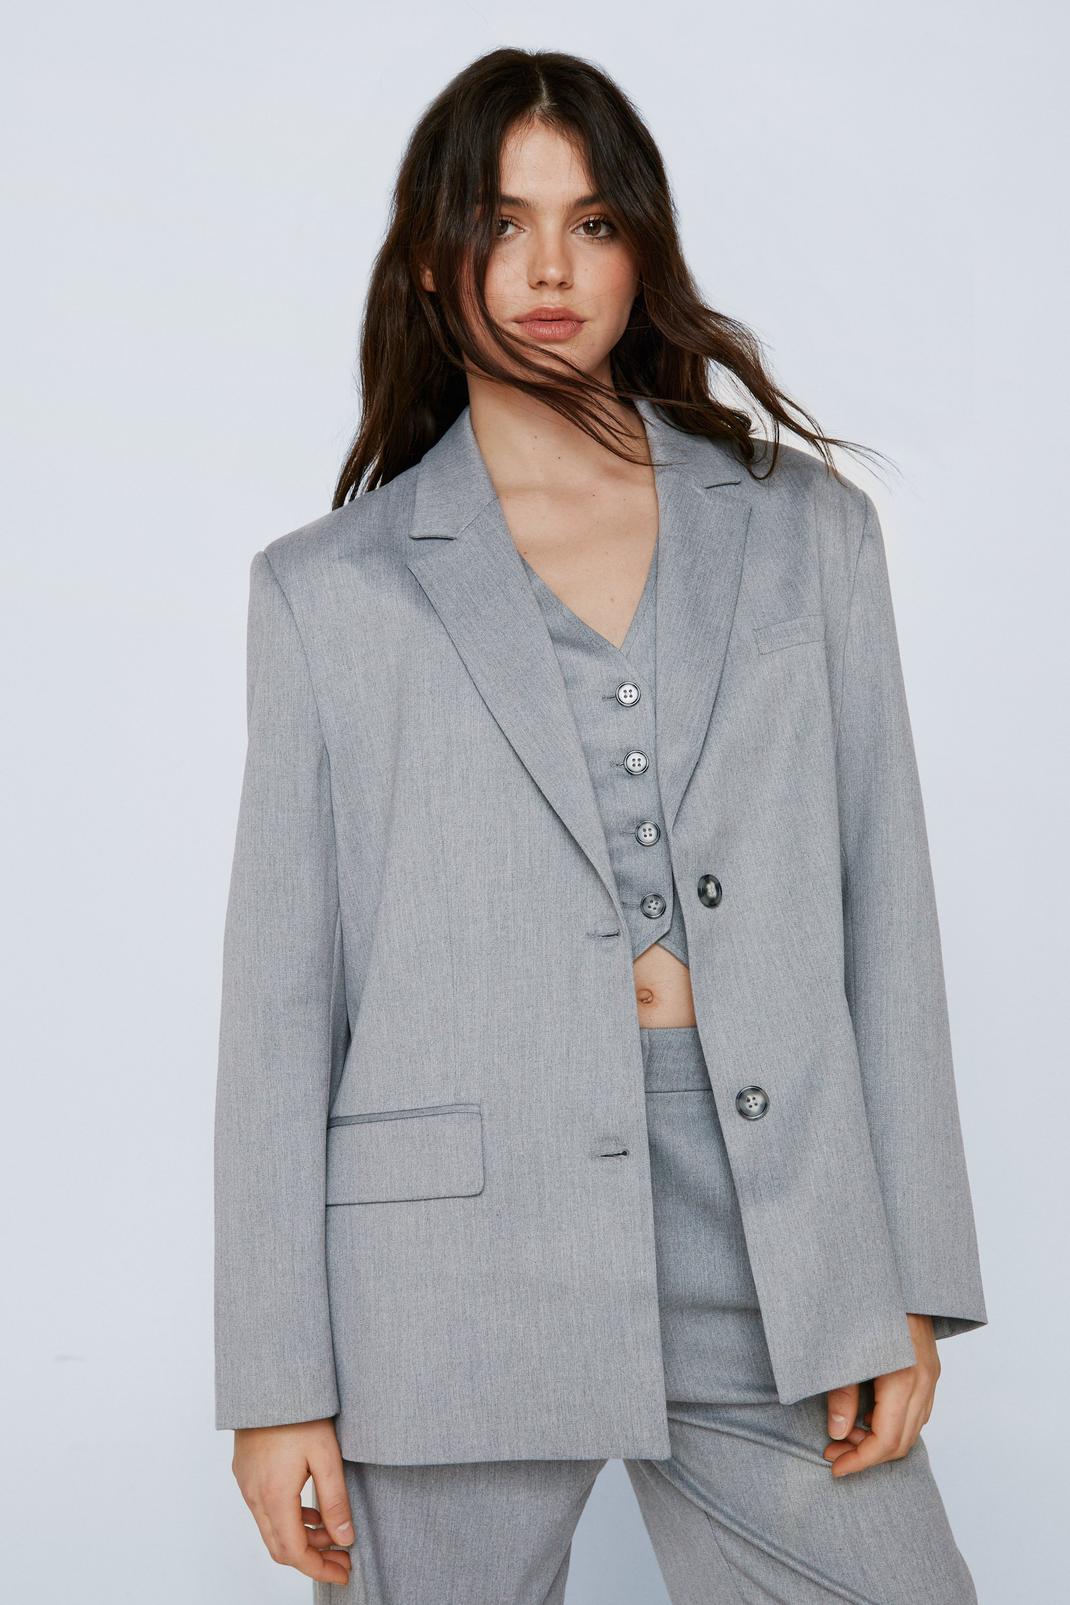 Premium - oversized blazer grey